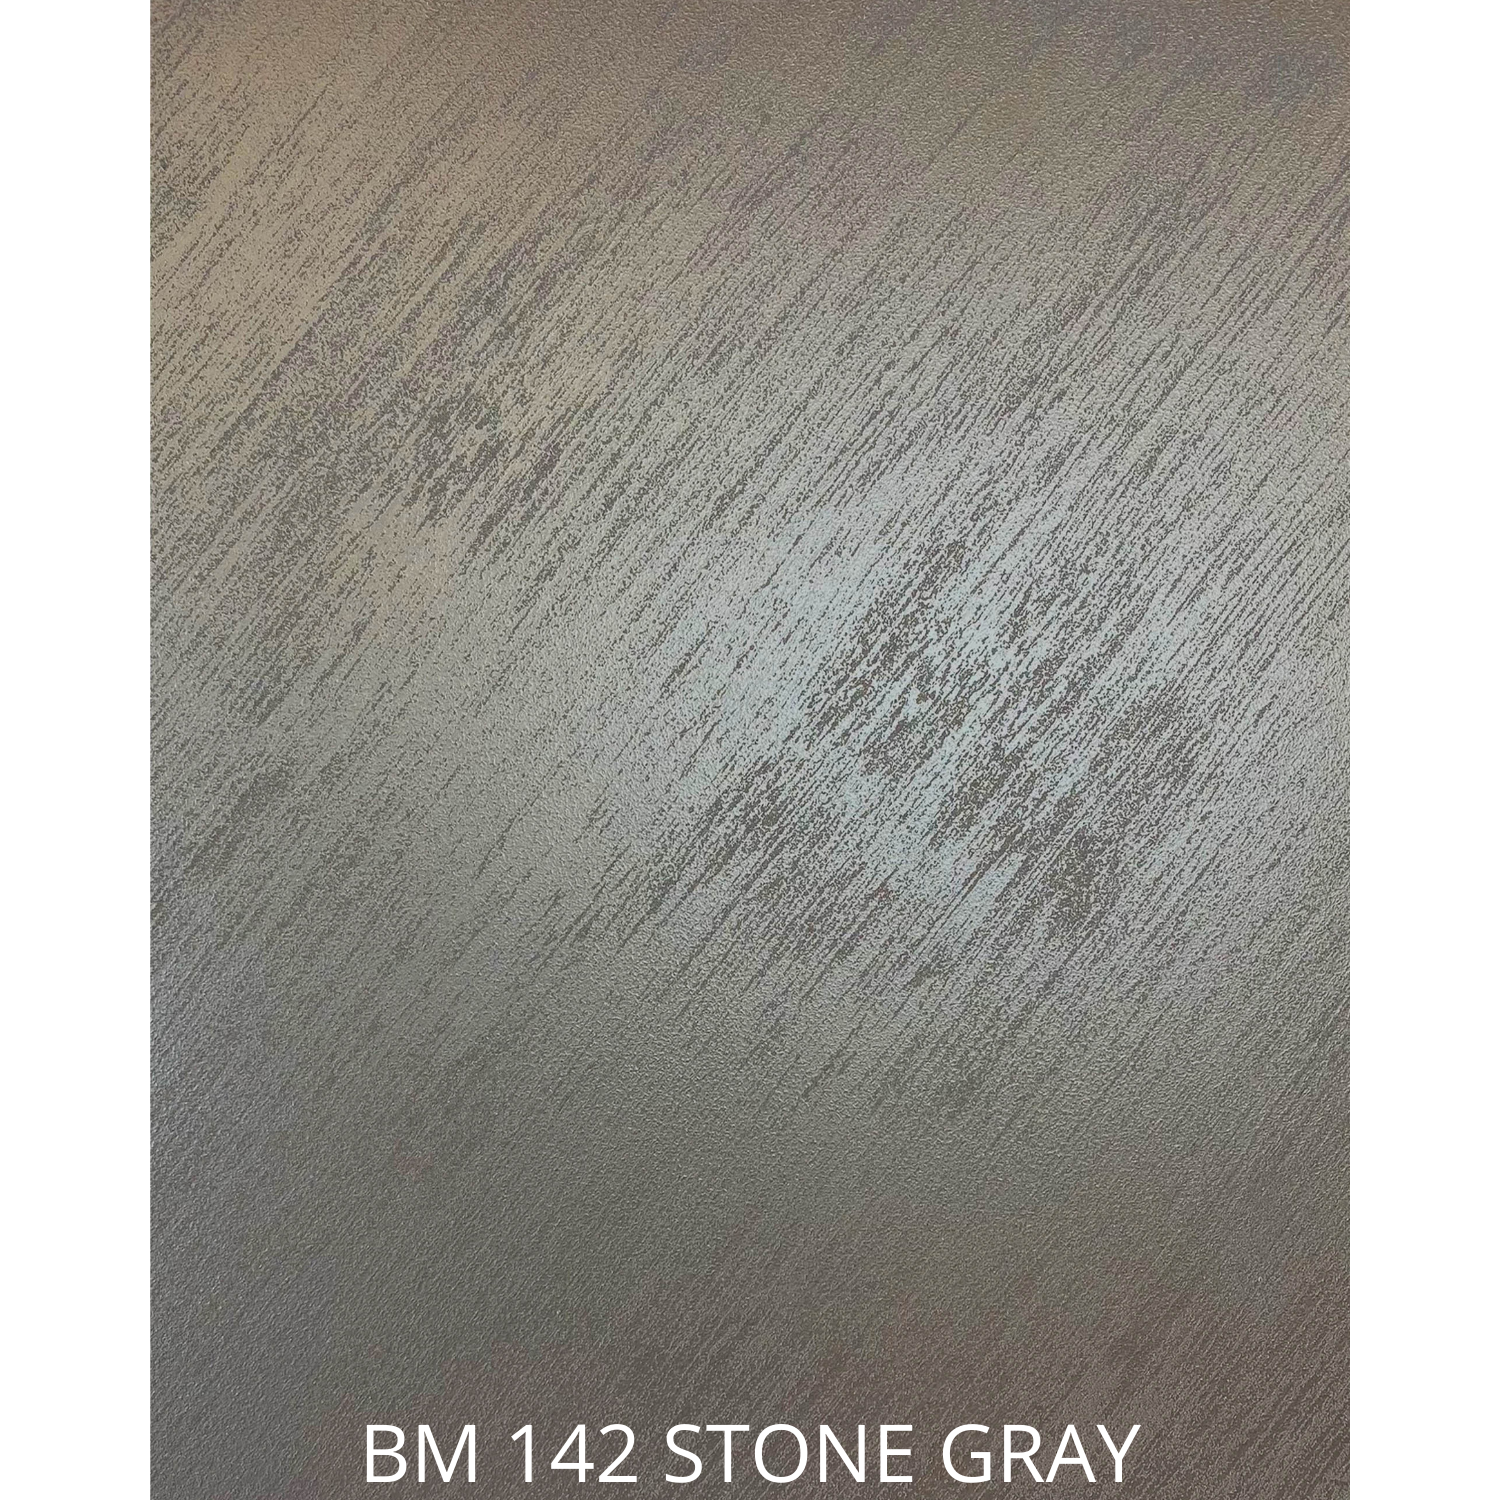 BM 142 STONE GRAY